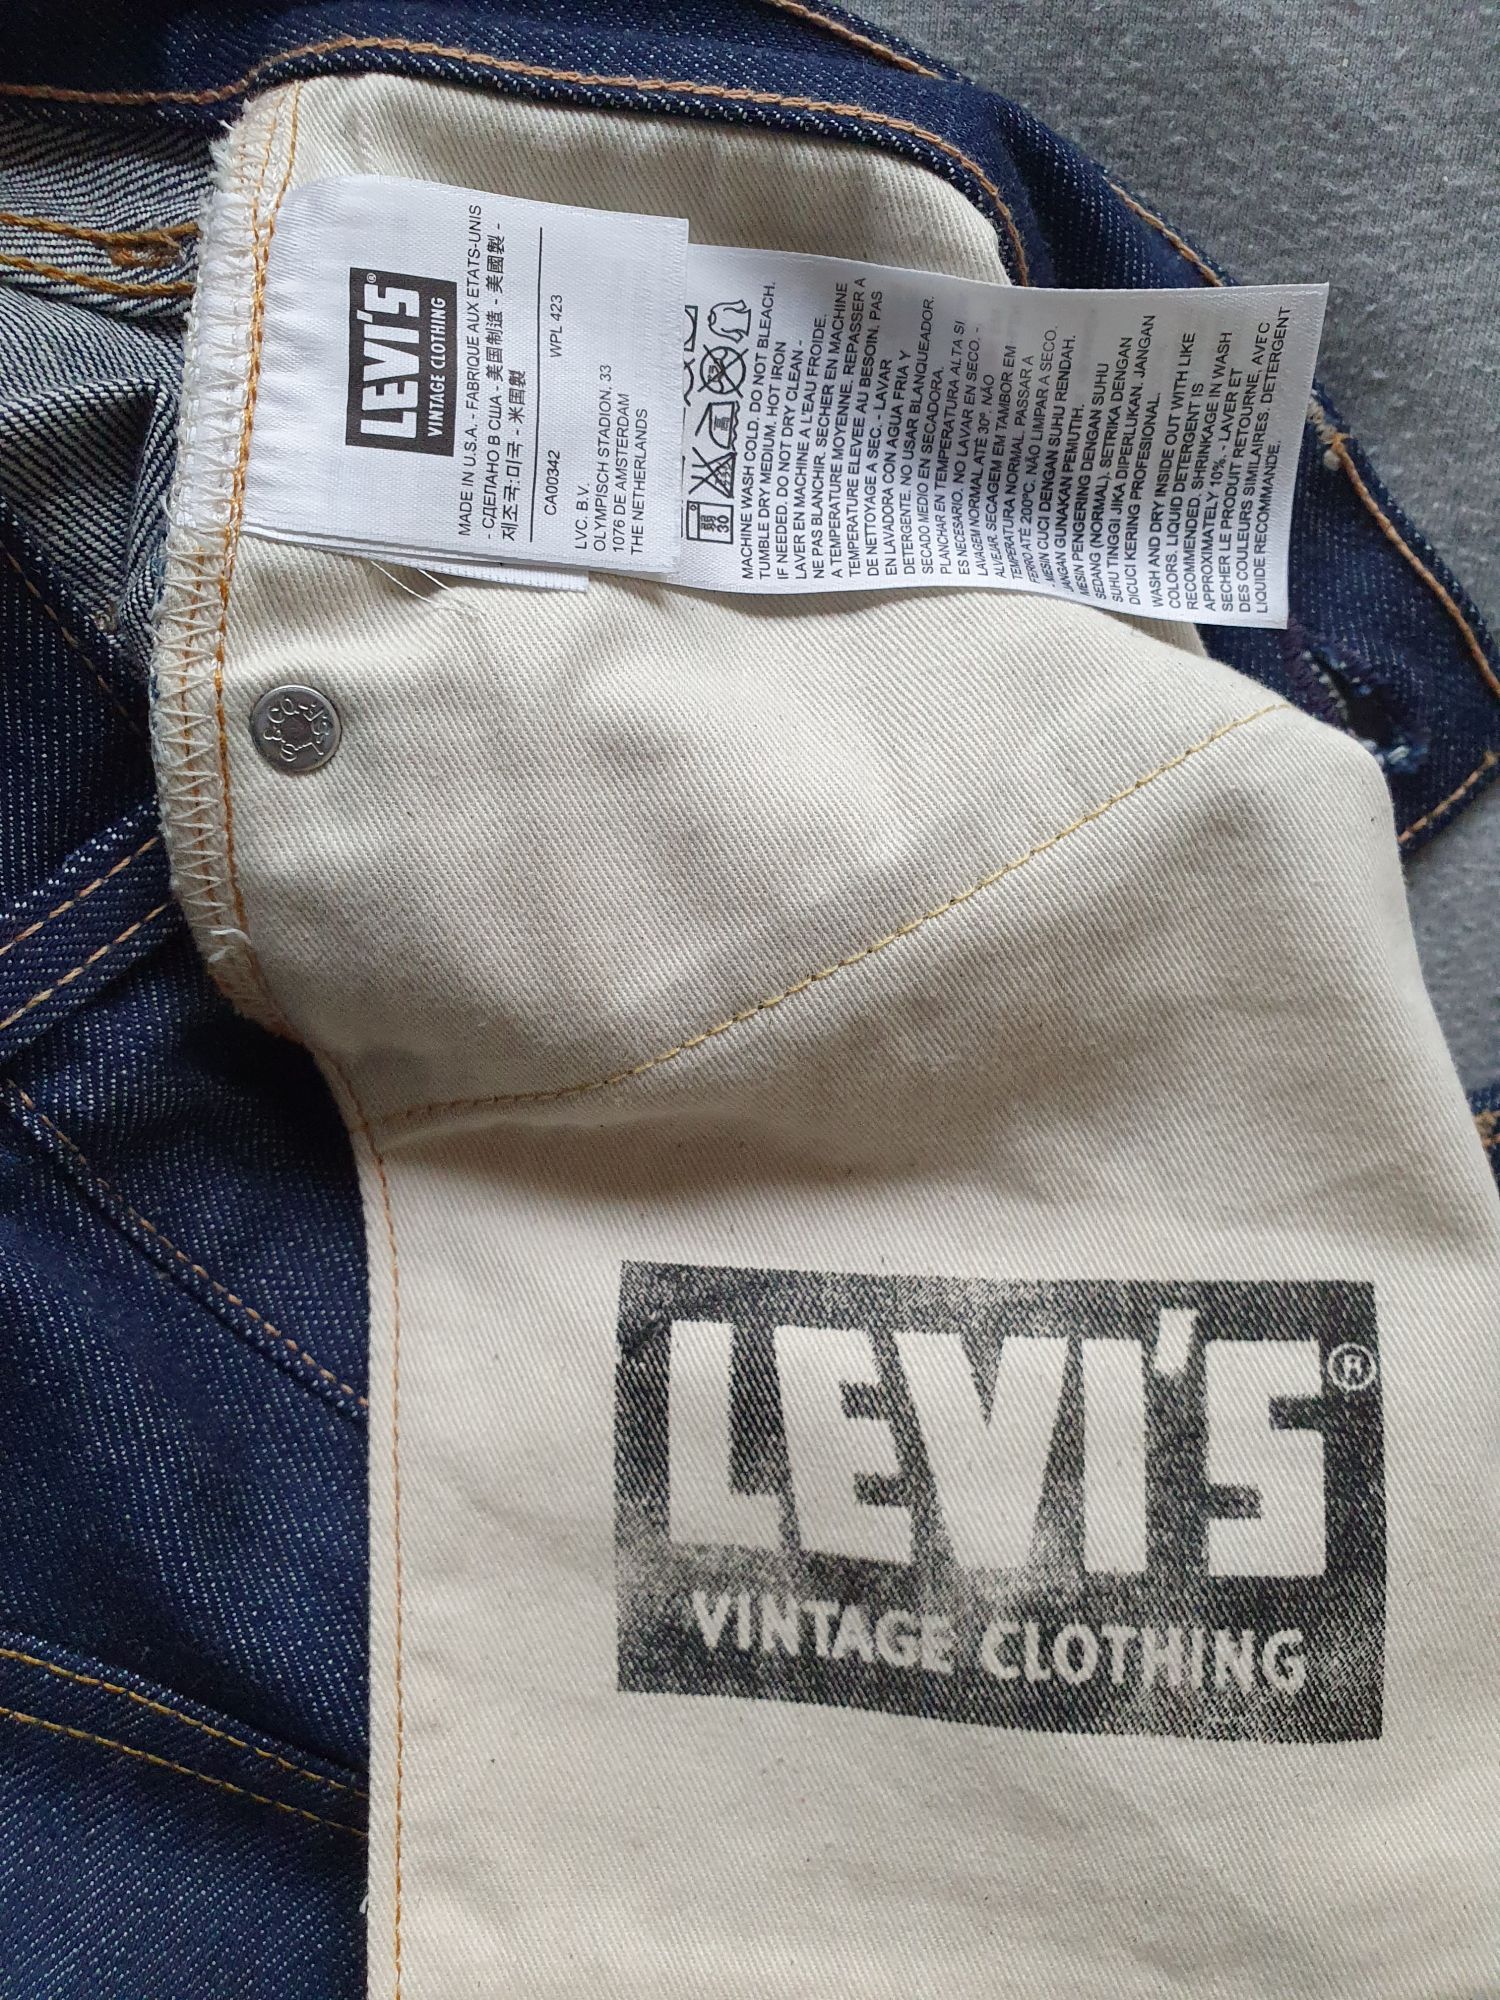 Levi's Vintage Clothing - Page 733 - superdenim - superfuture